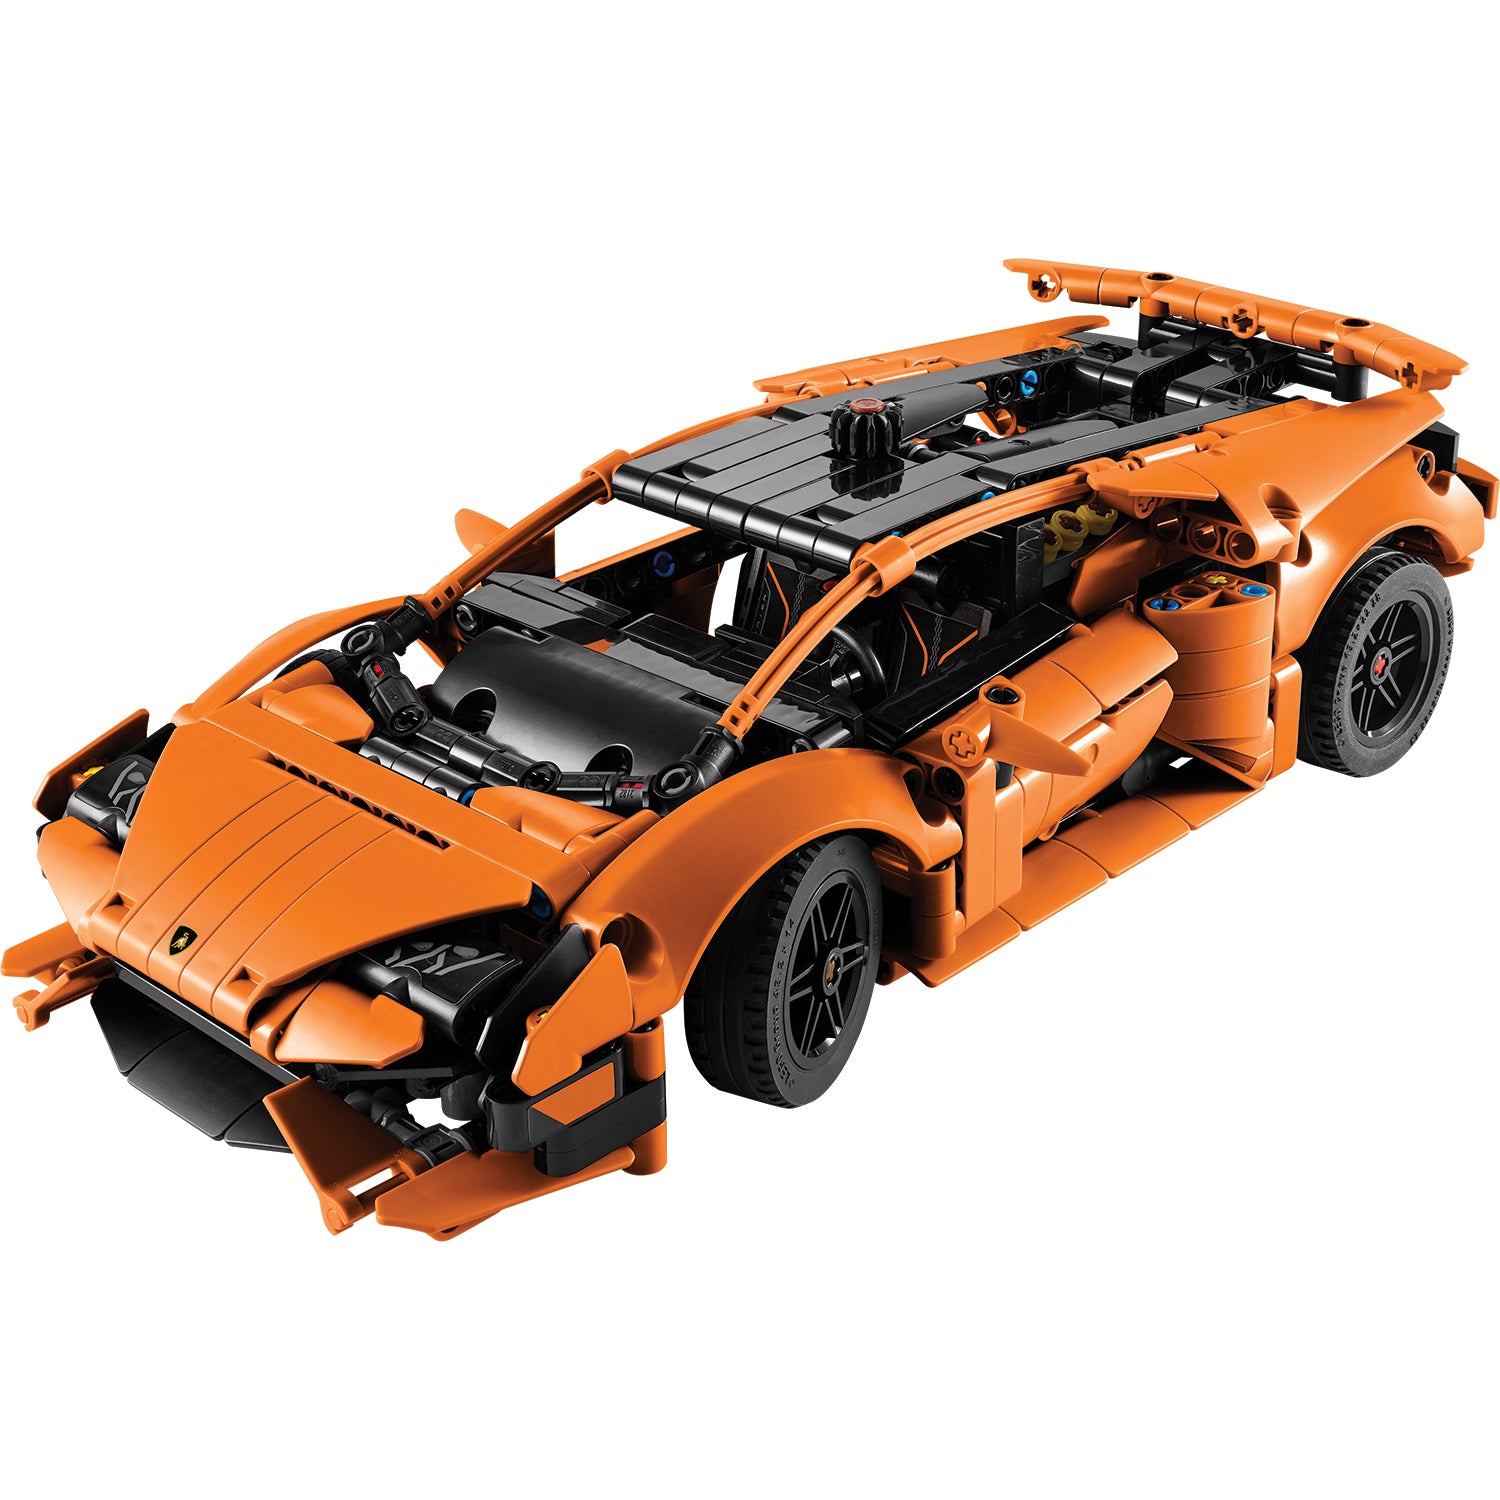 LEGO Technic Lamborghini Huracán Tecnica Orange revealed